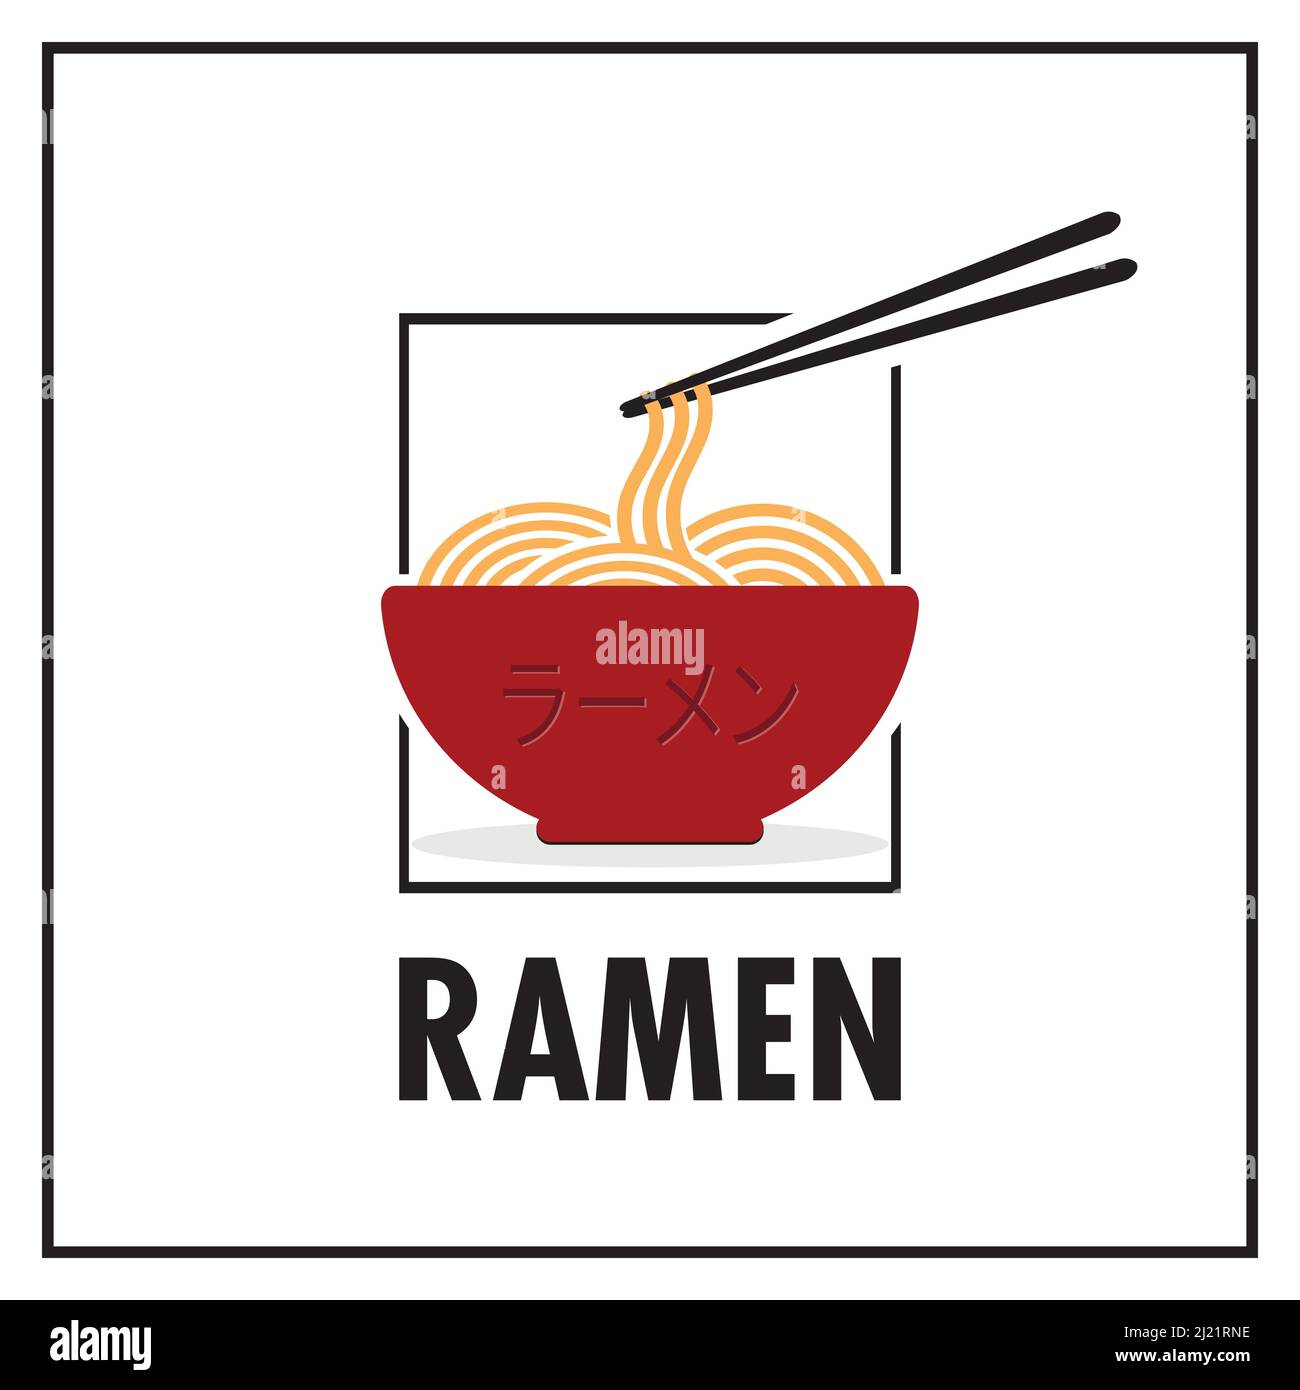 Ramen - ラーメン - Vector illustration on a white background Stock Vector